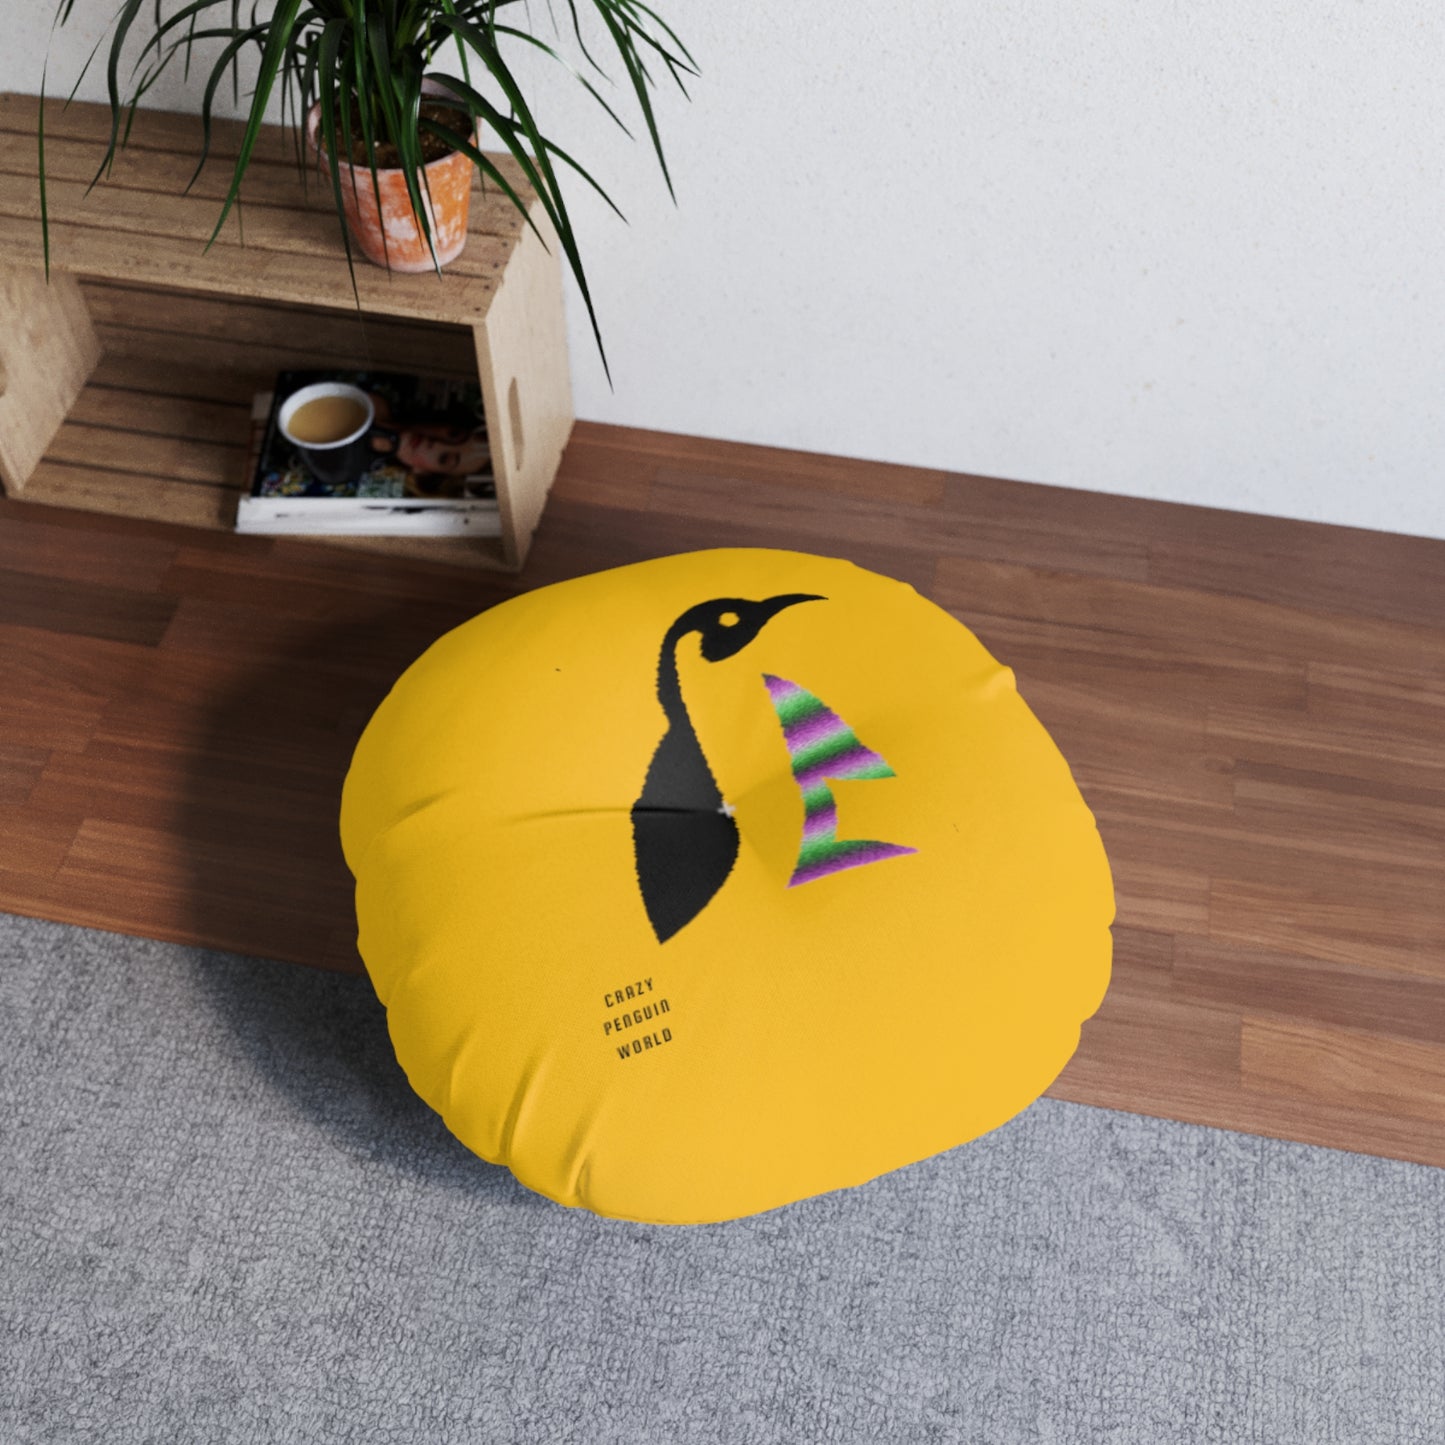 Tufted Floor Pillow, Round: Crazy Penguin World Logo Yellow